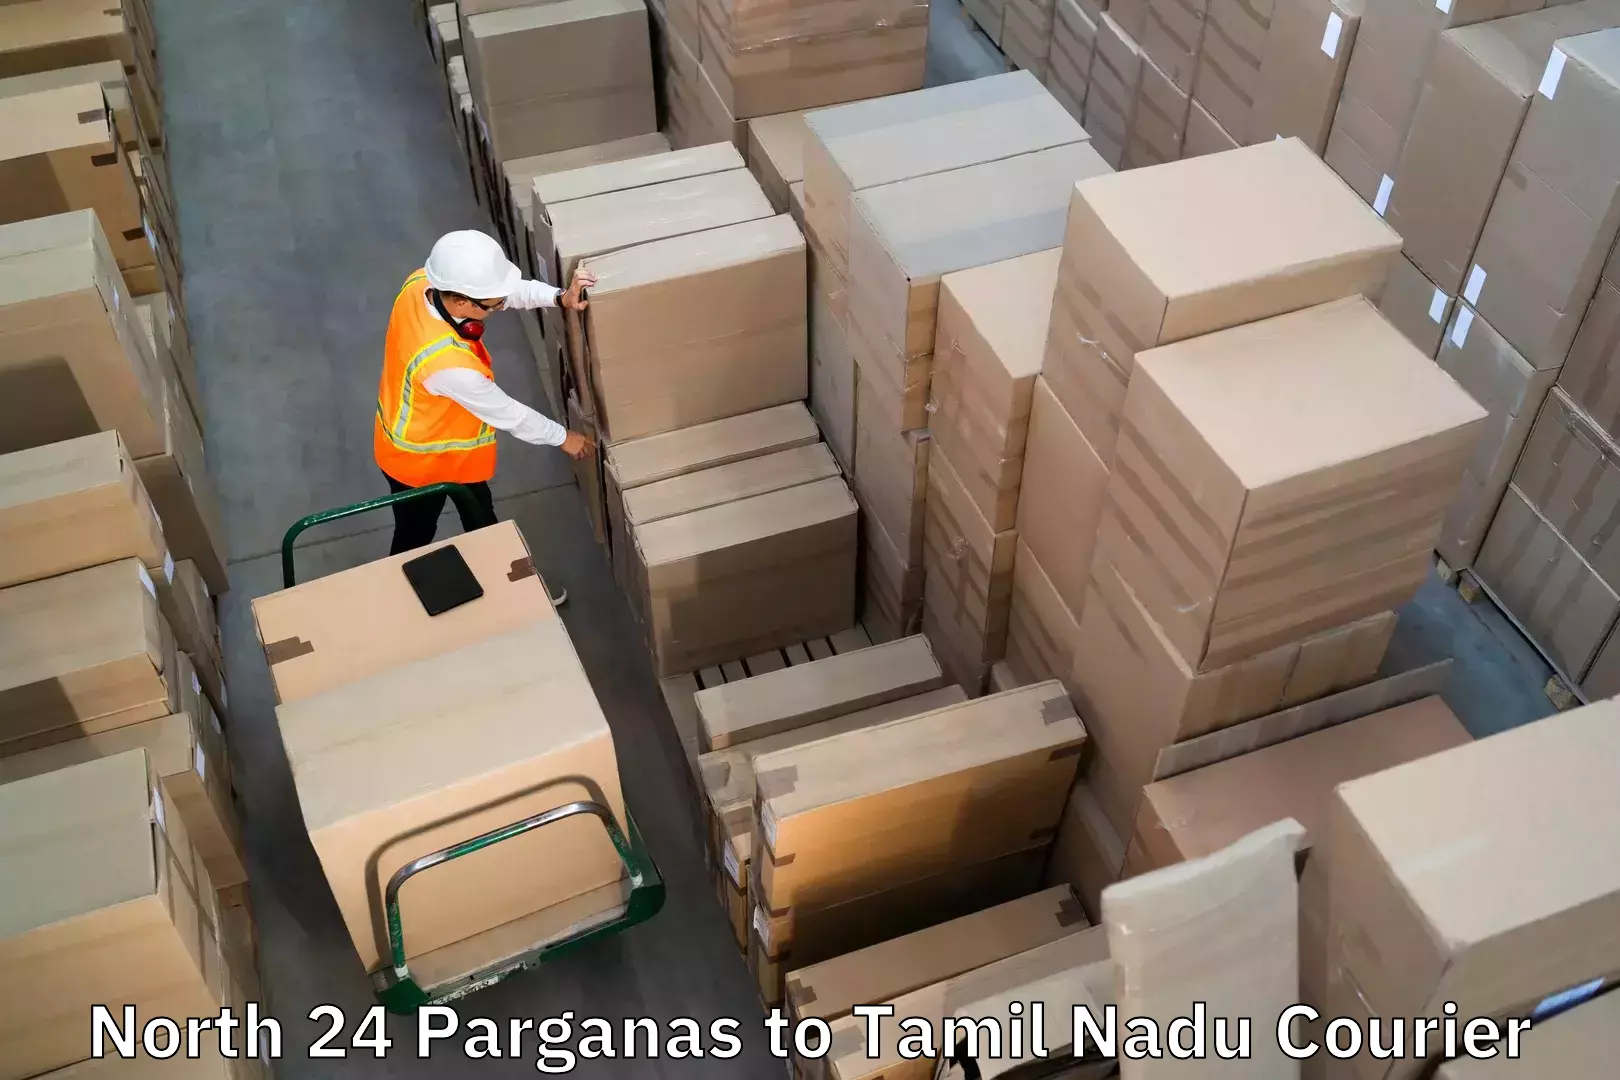 Luggage shipment specialists North 24 Parganas to The Gandhigram Rural Institute